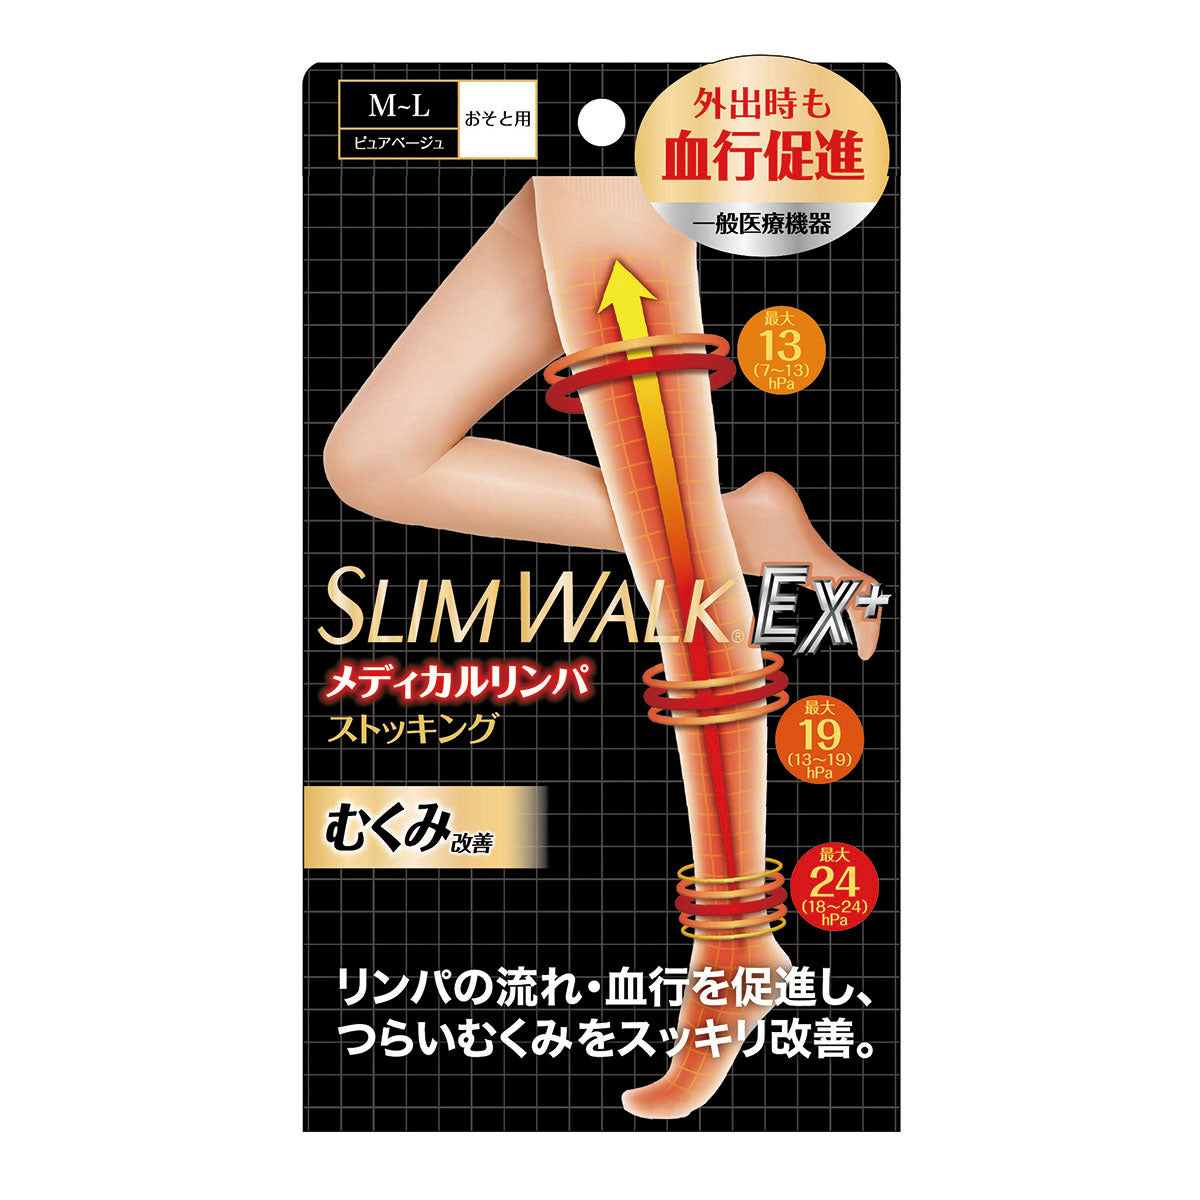 SLIMWALK 醫療保健 壓力絲襪褲 - 淺肉色（耐勾）（S-M / M-L）